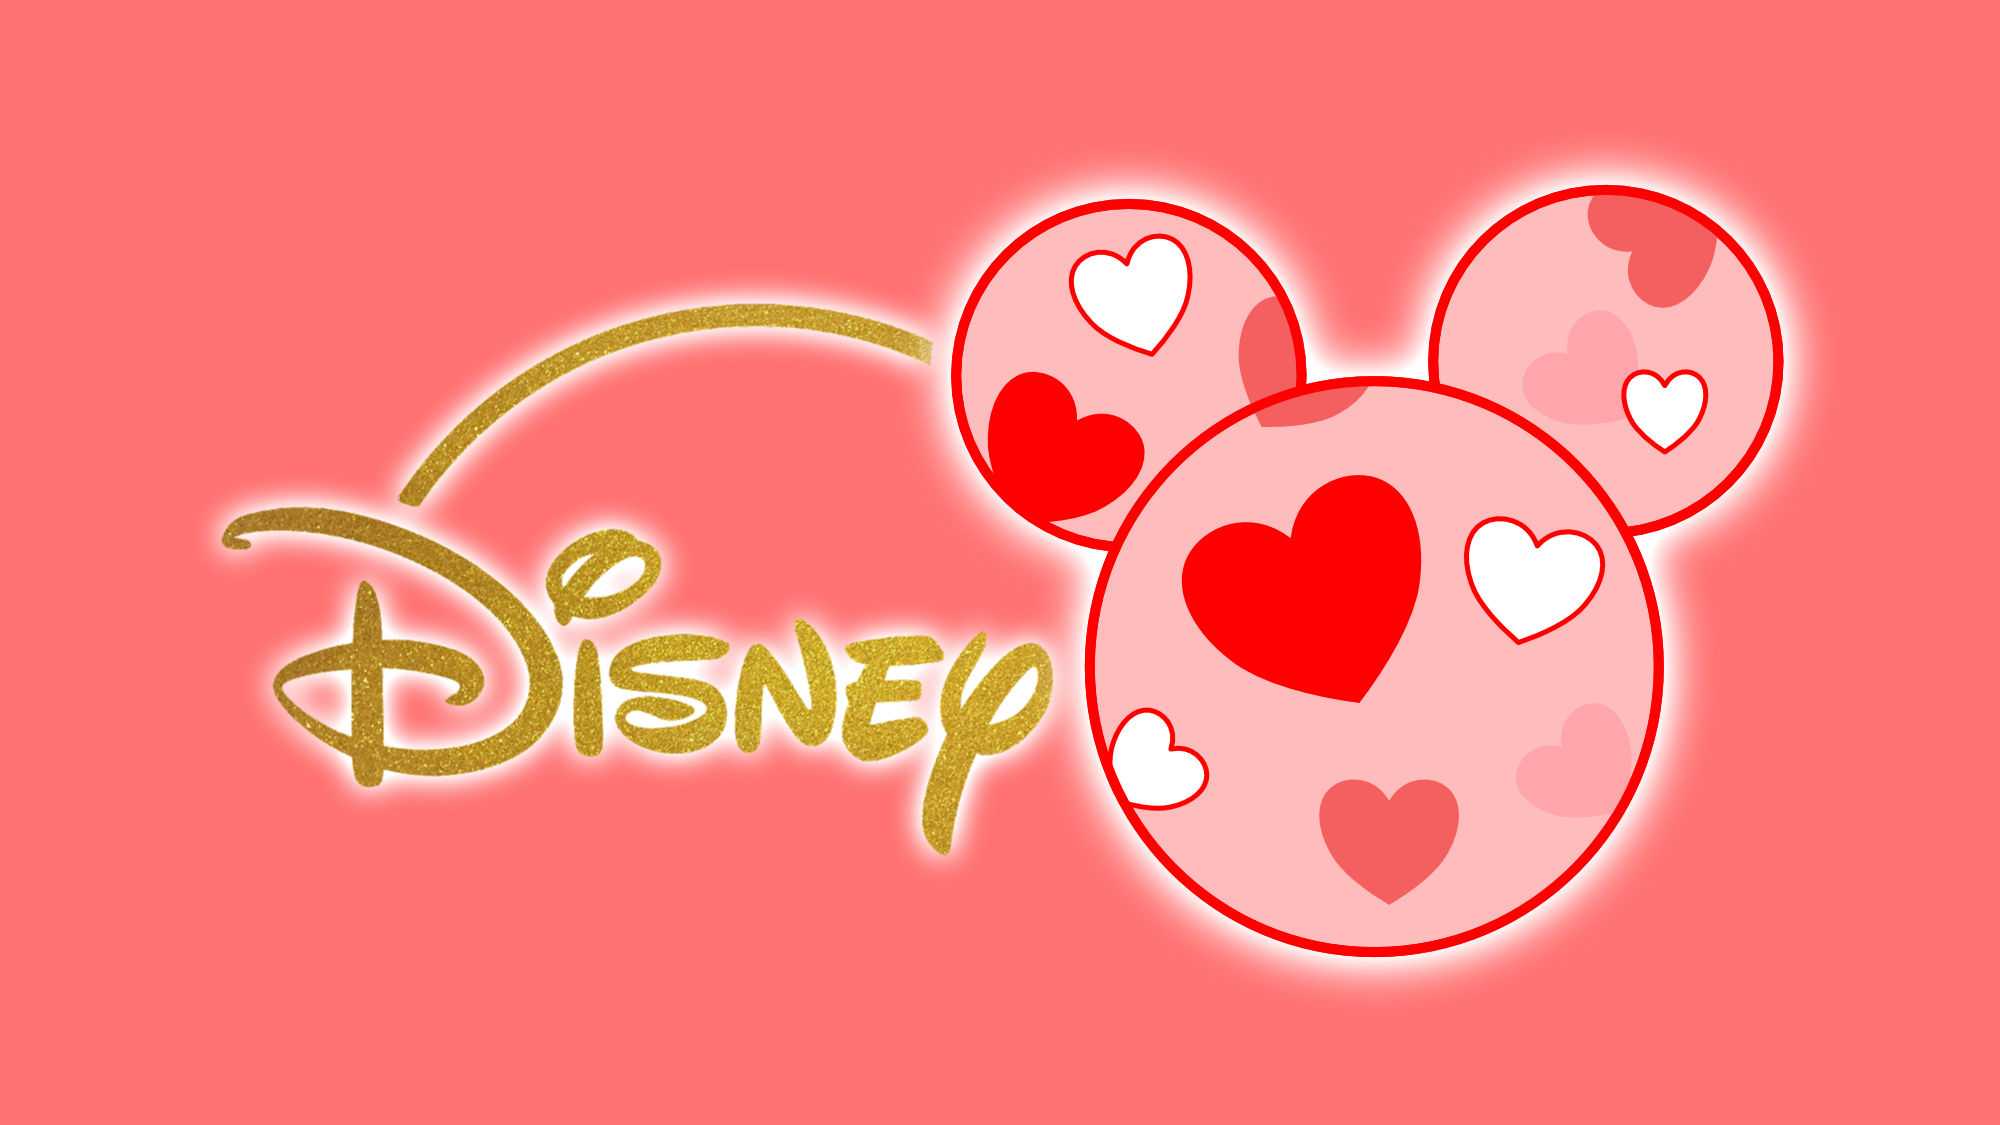 5 clásicos Disney para este San Valentín